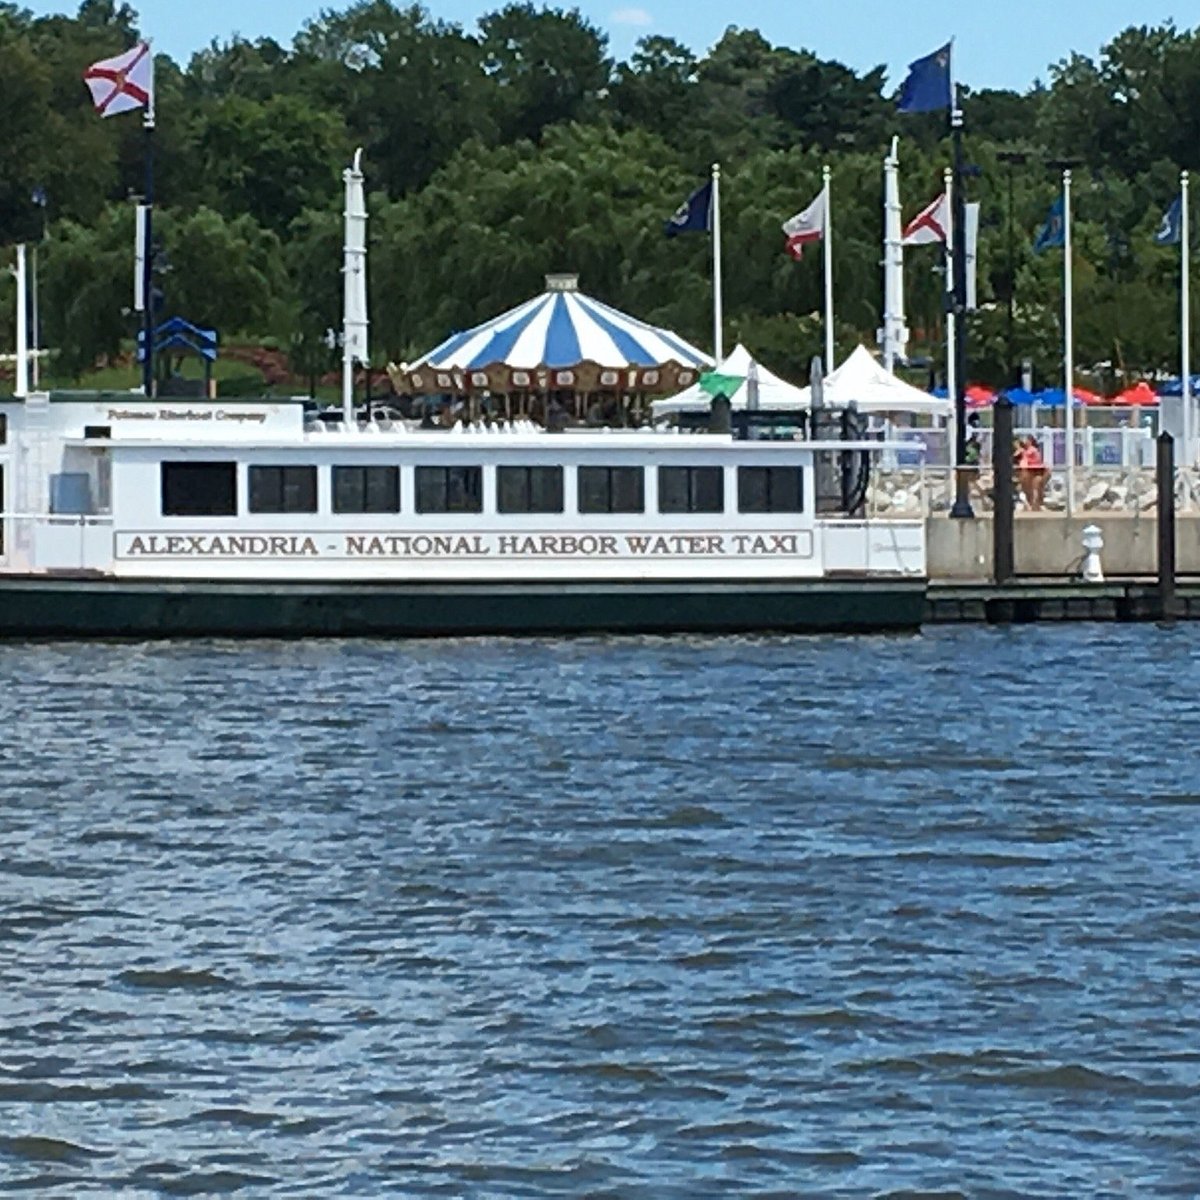 potomac riverboat company water taxi